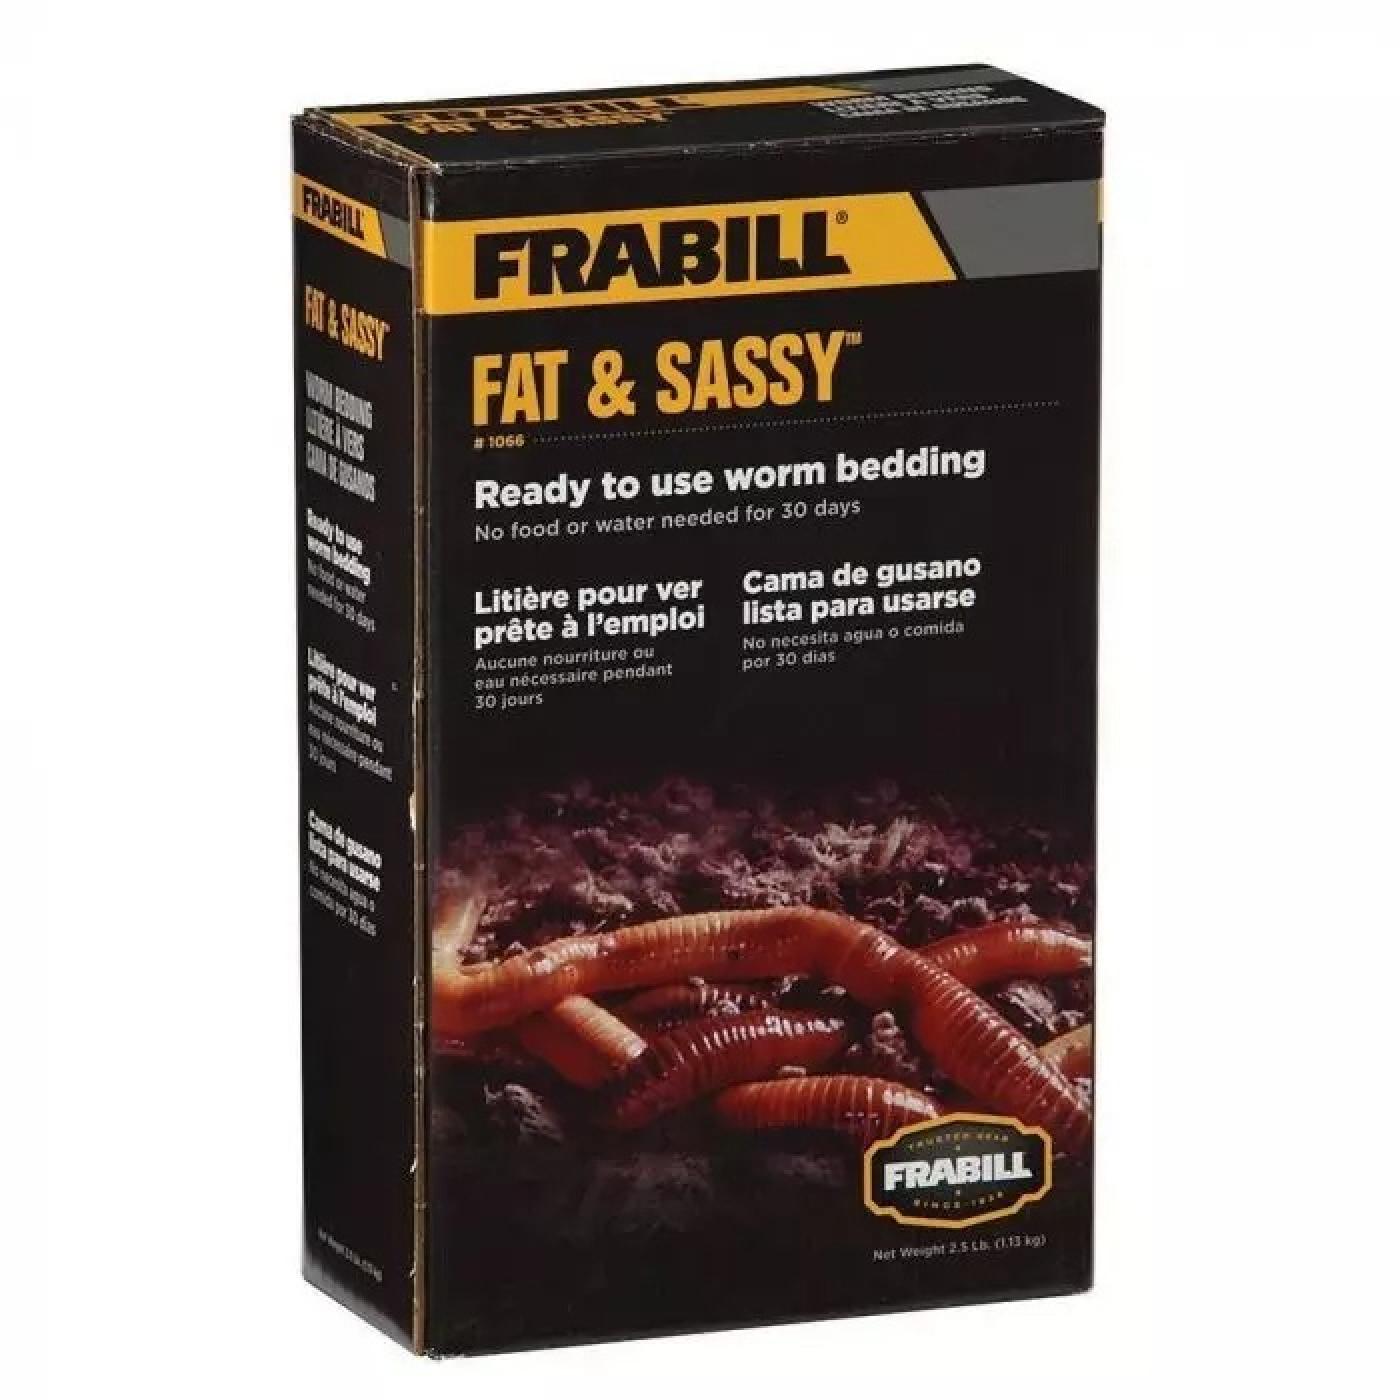 Frabill Fat & Sassy™ Worm Bedding